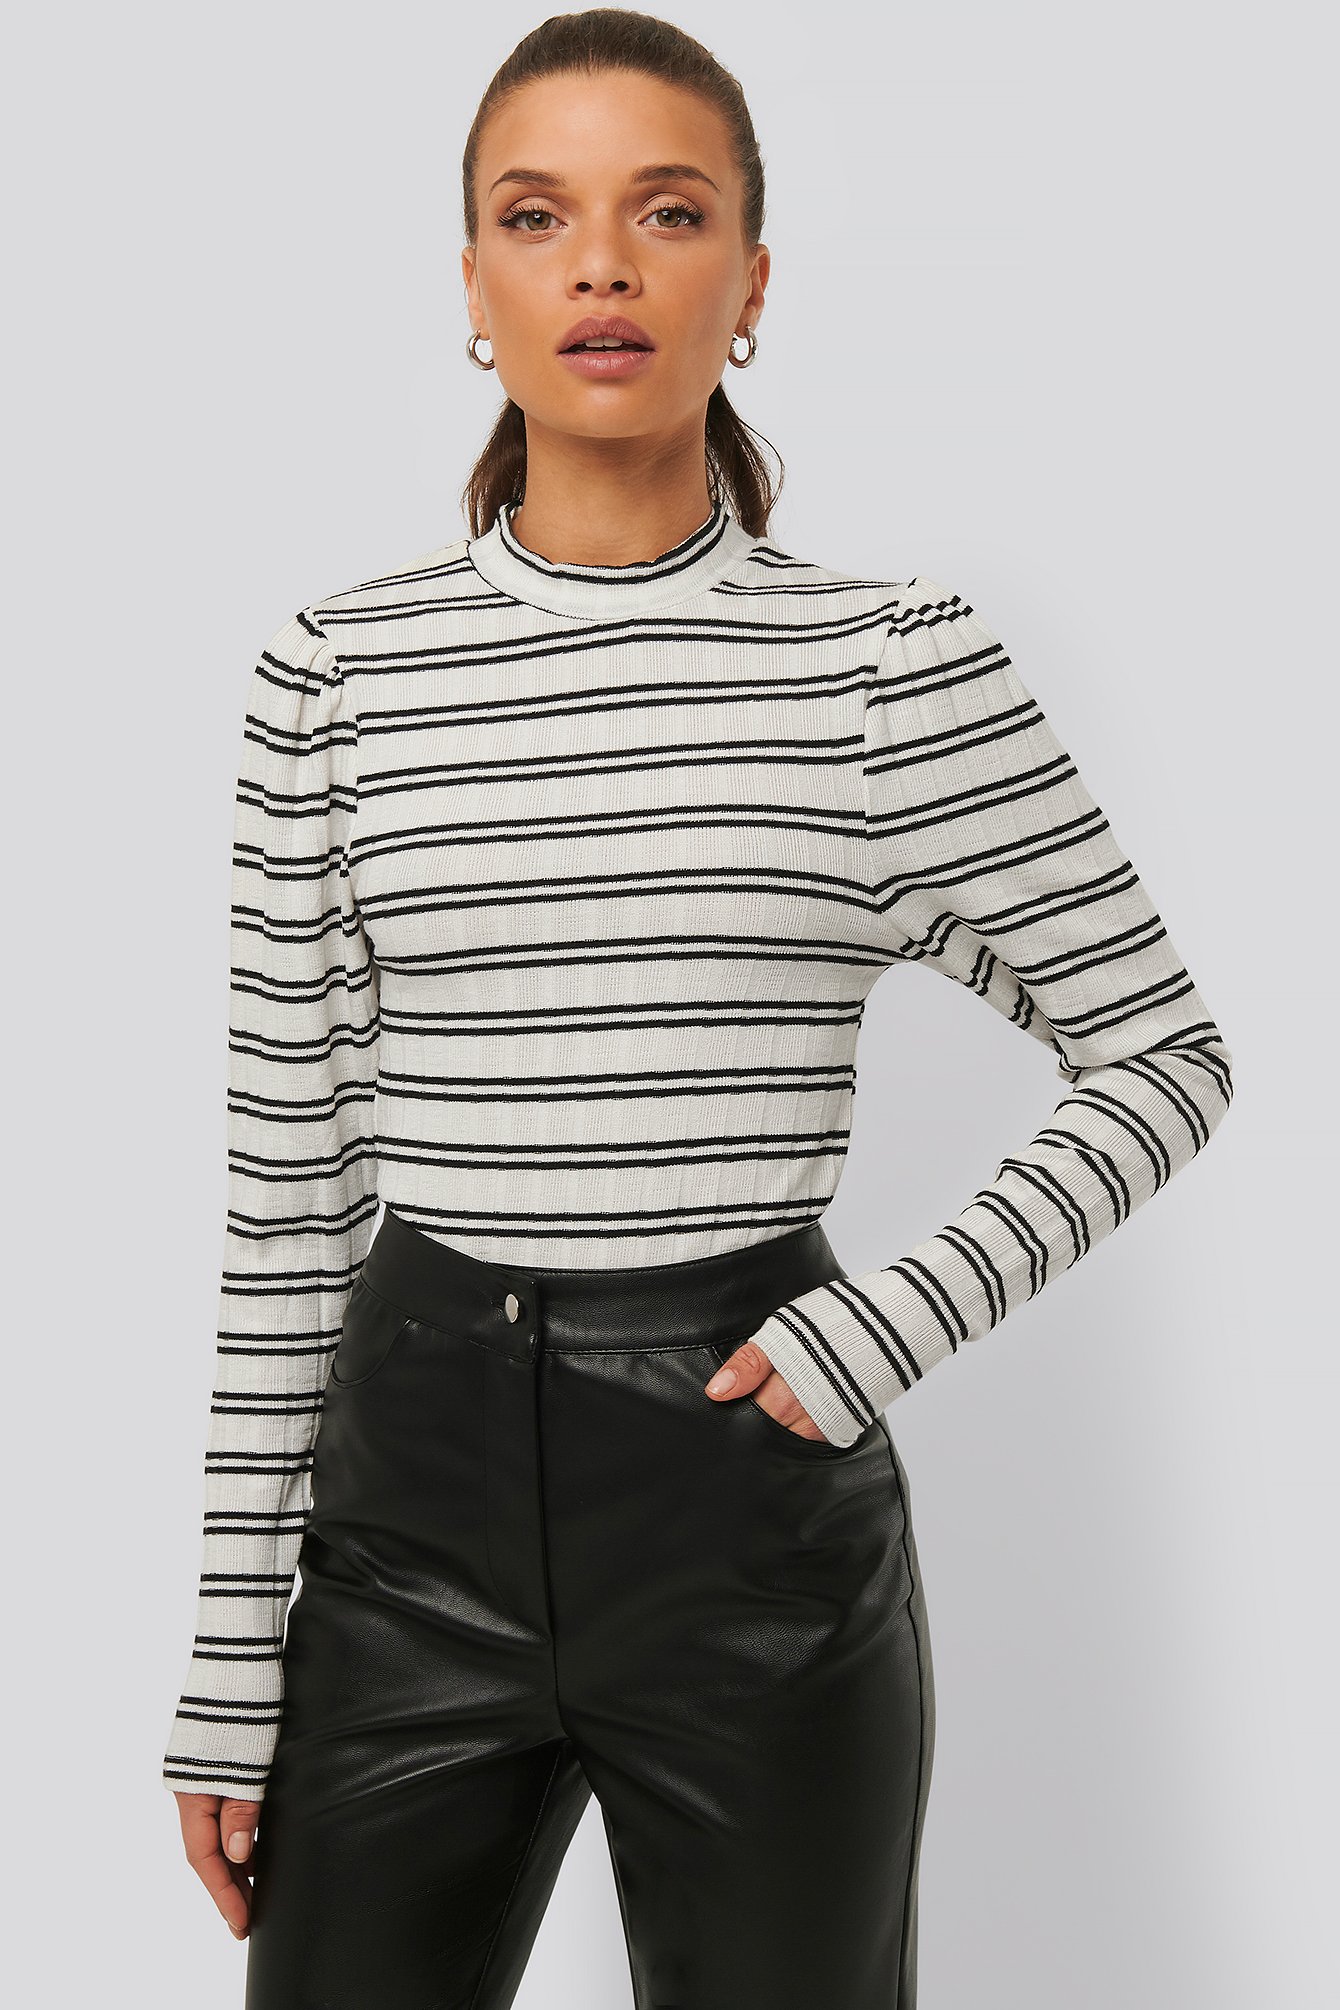 Stripe Black/White Striped Puff Shoulder Top